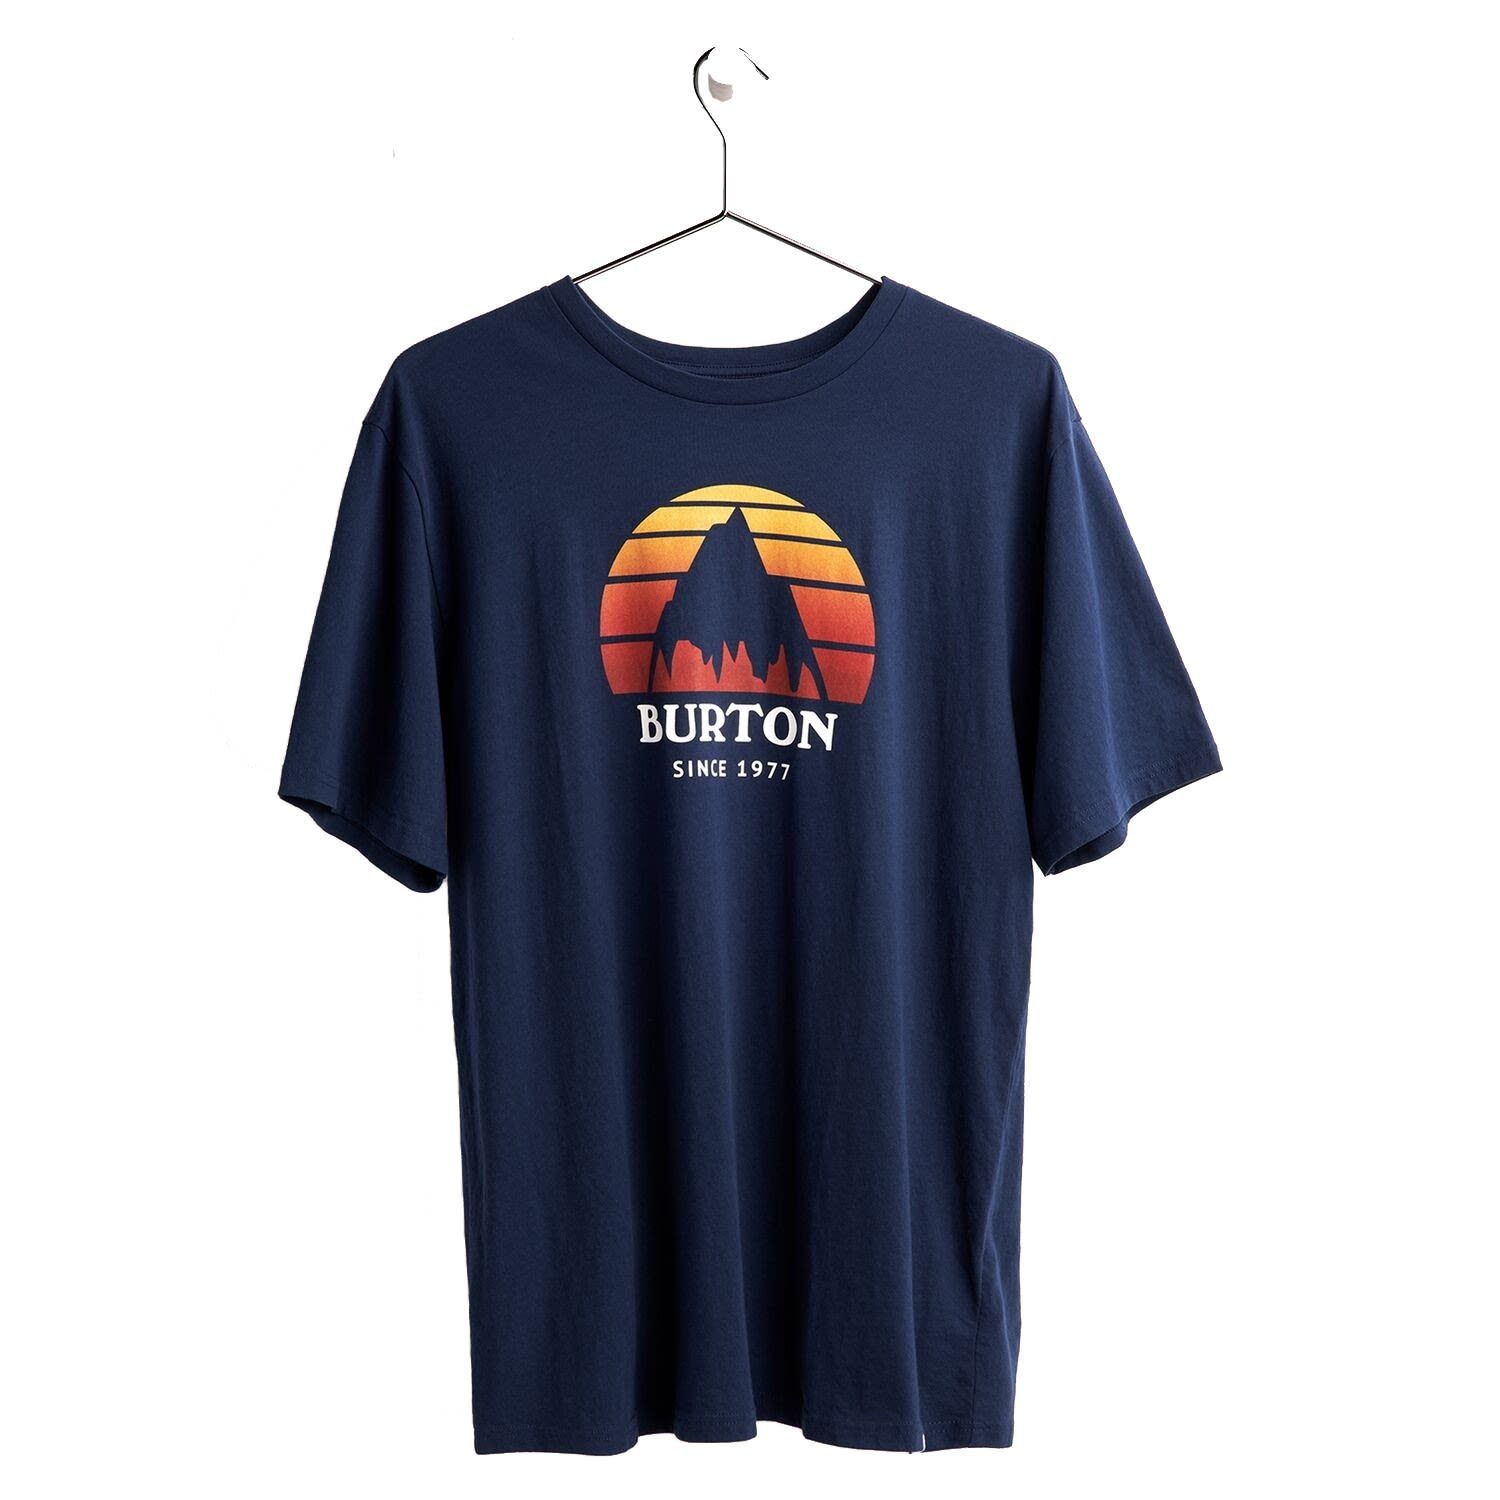 T-Shirt Kurzarm-Shirt Underhill Burton Shortsleeve Burton Tee Blue Dress